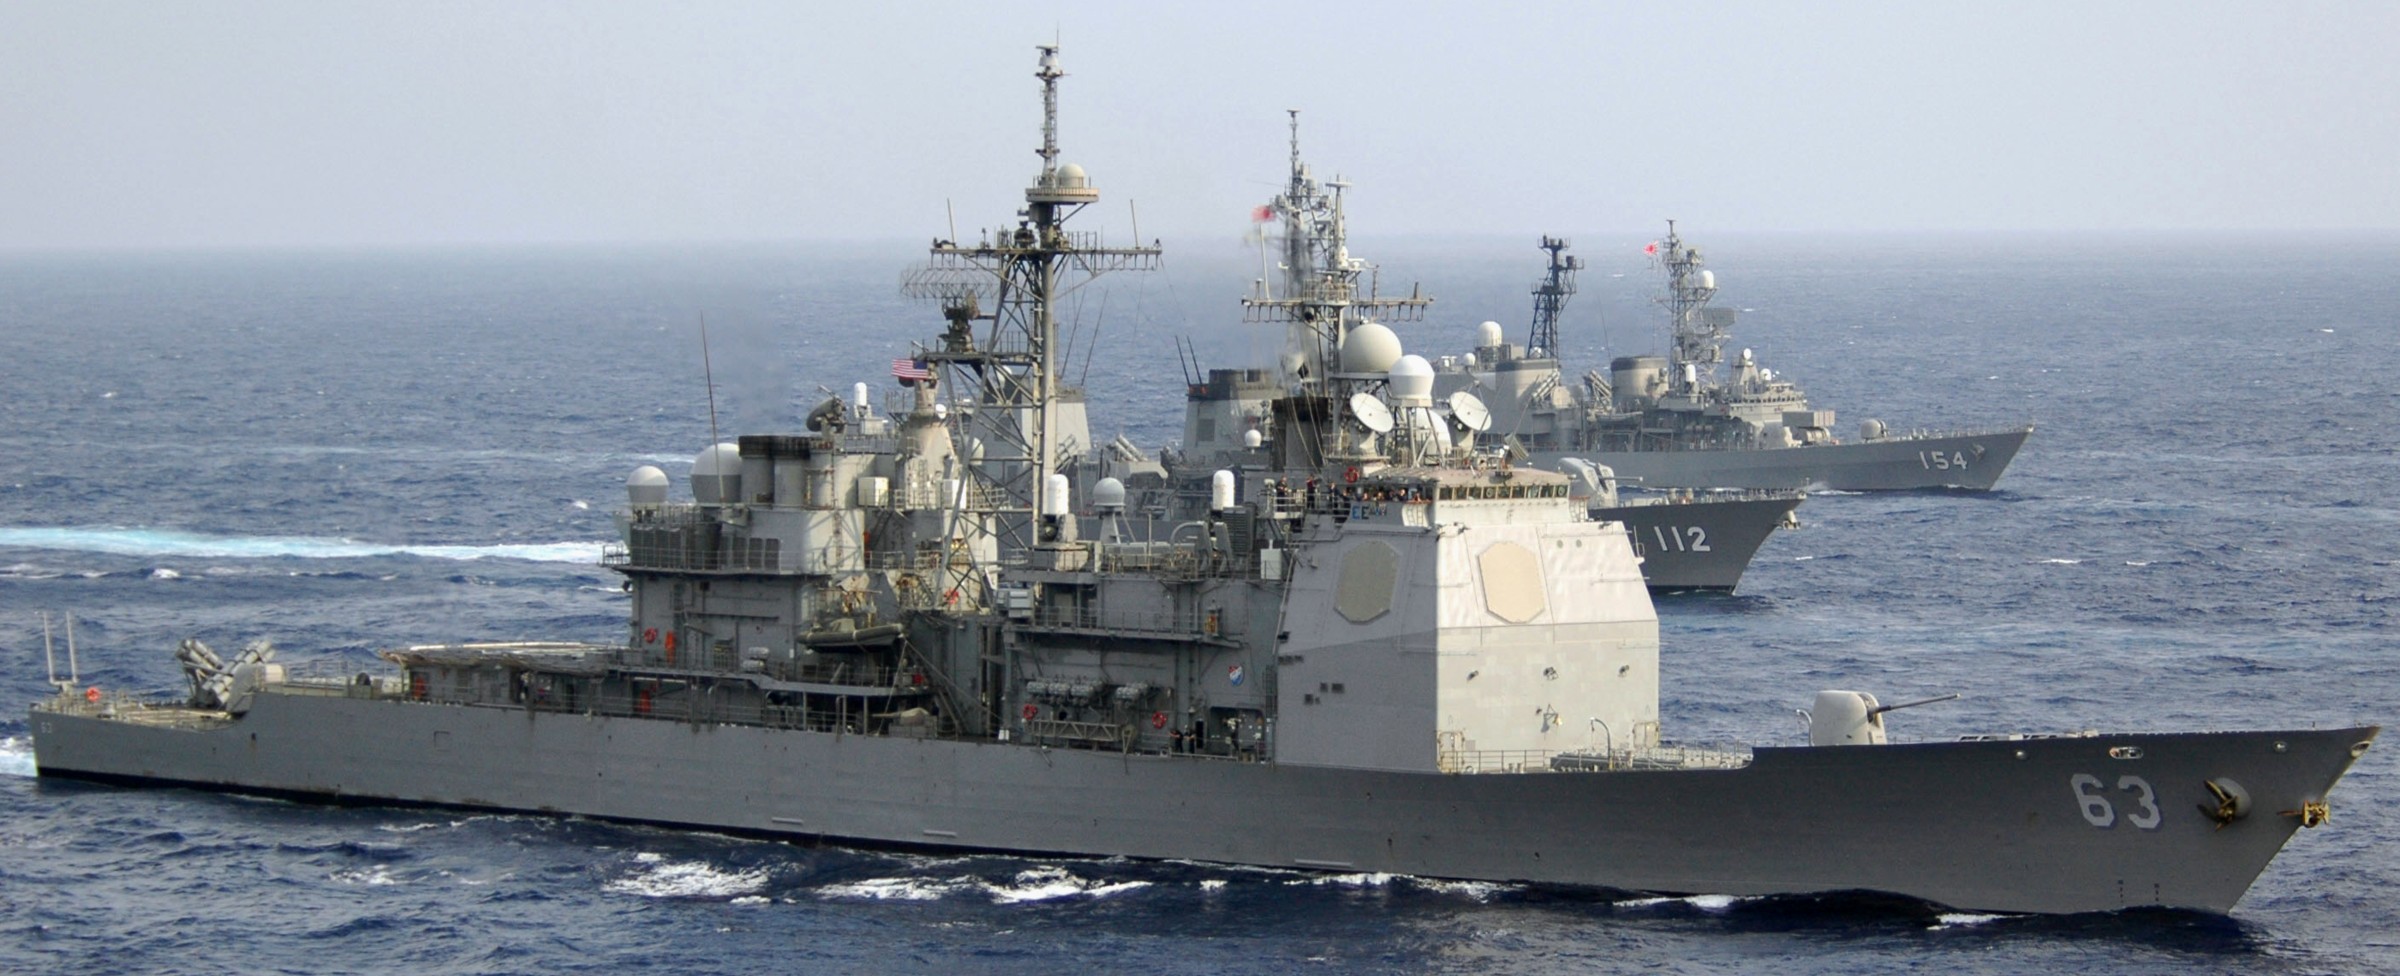 cg-63 uss cowpens ticonderoga class guided missile cruiser aegis us navy philippine sea 29